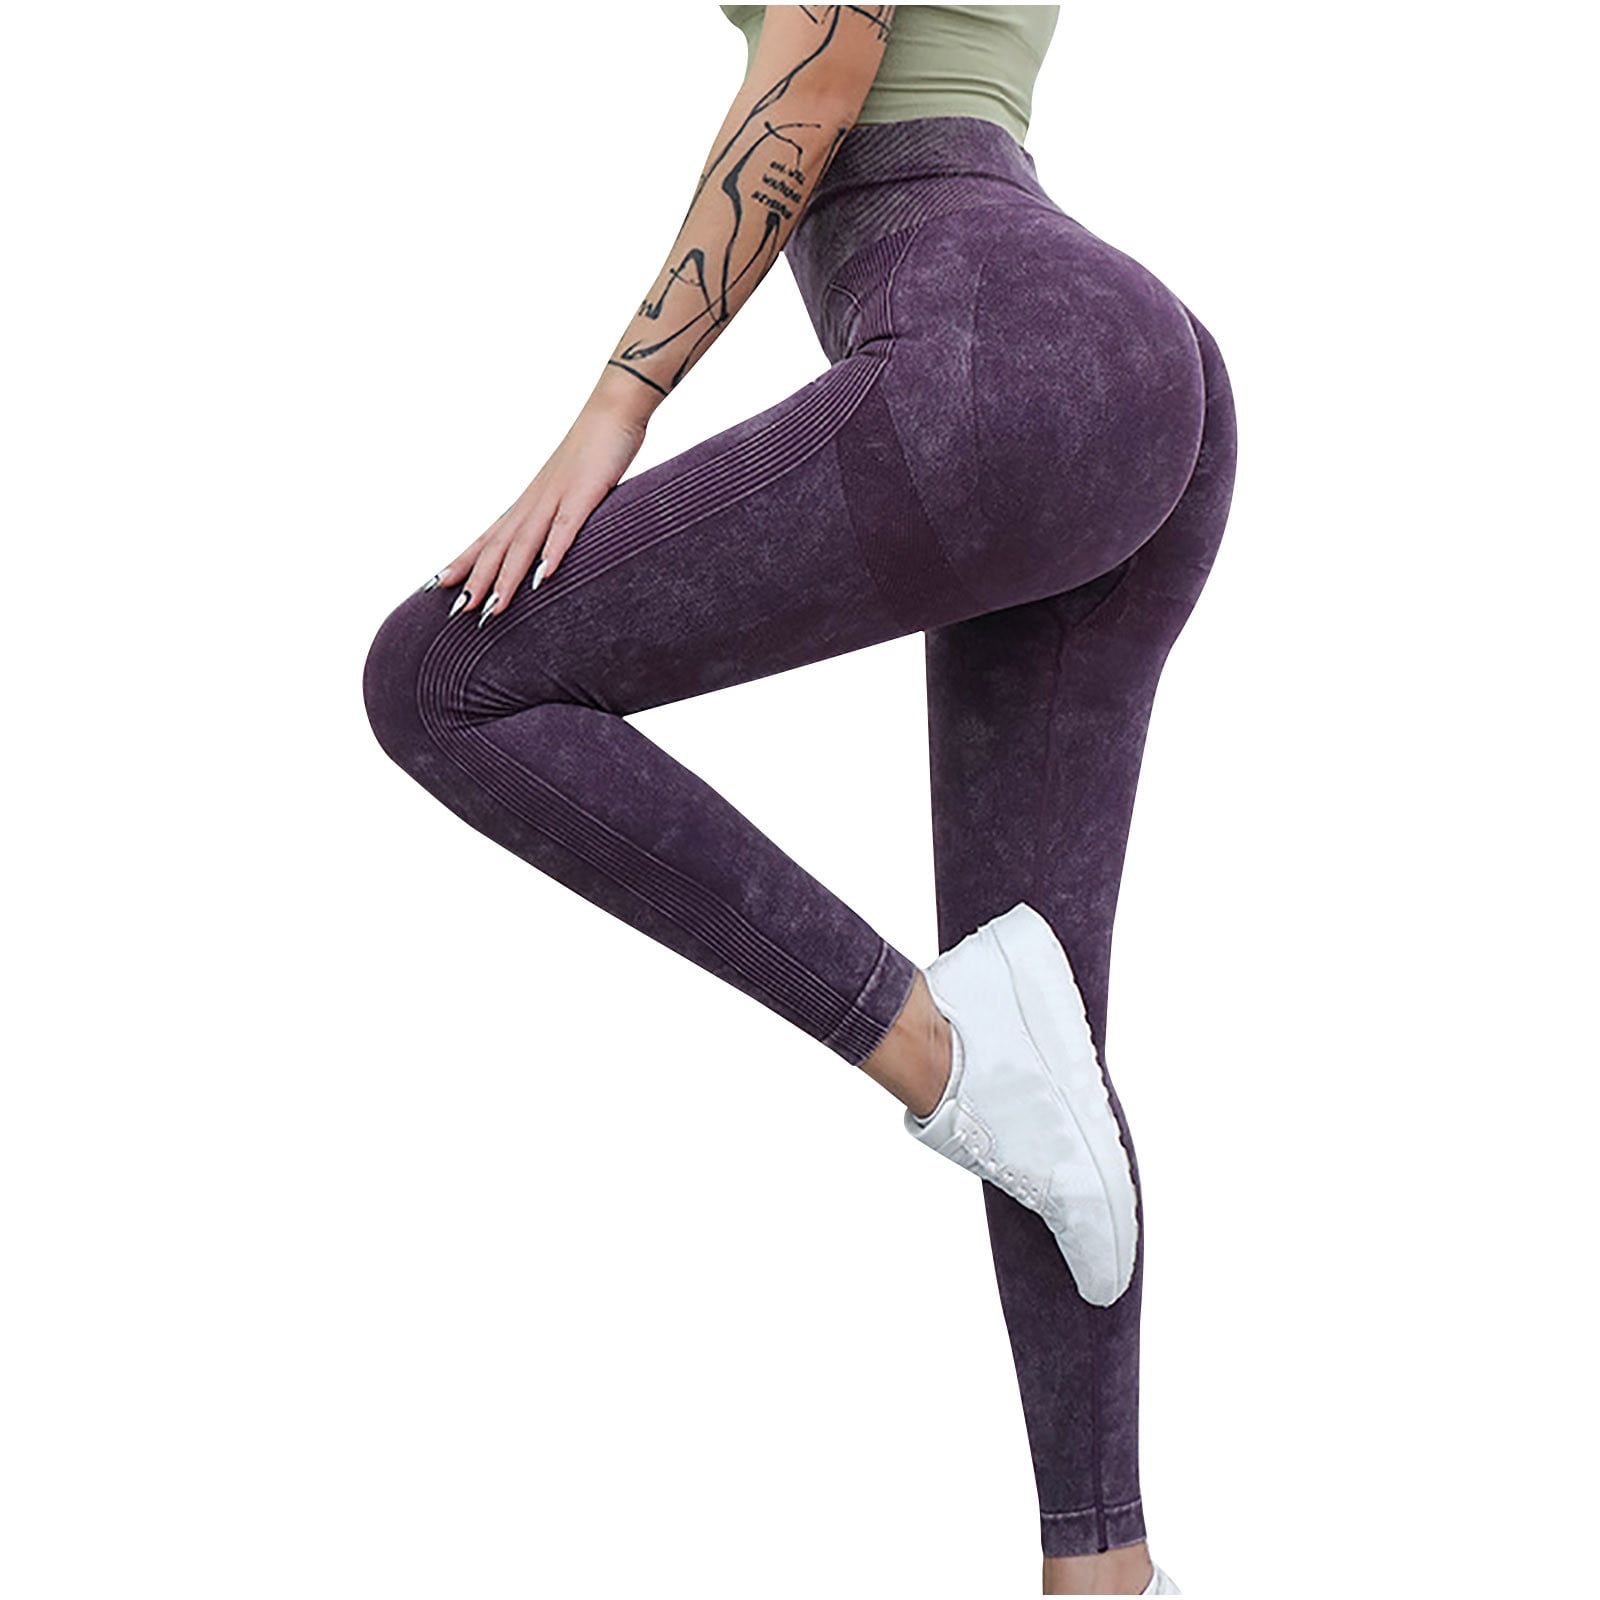  VAIFTILNO Women's Casual High Waist Yoga Pants Workout